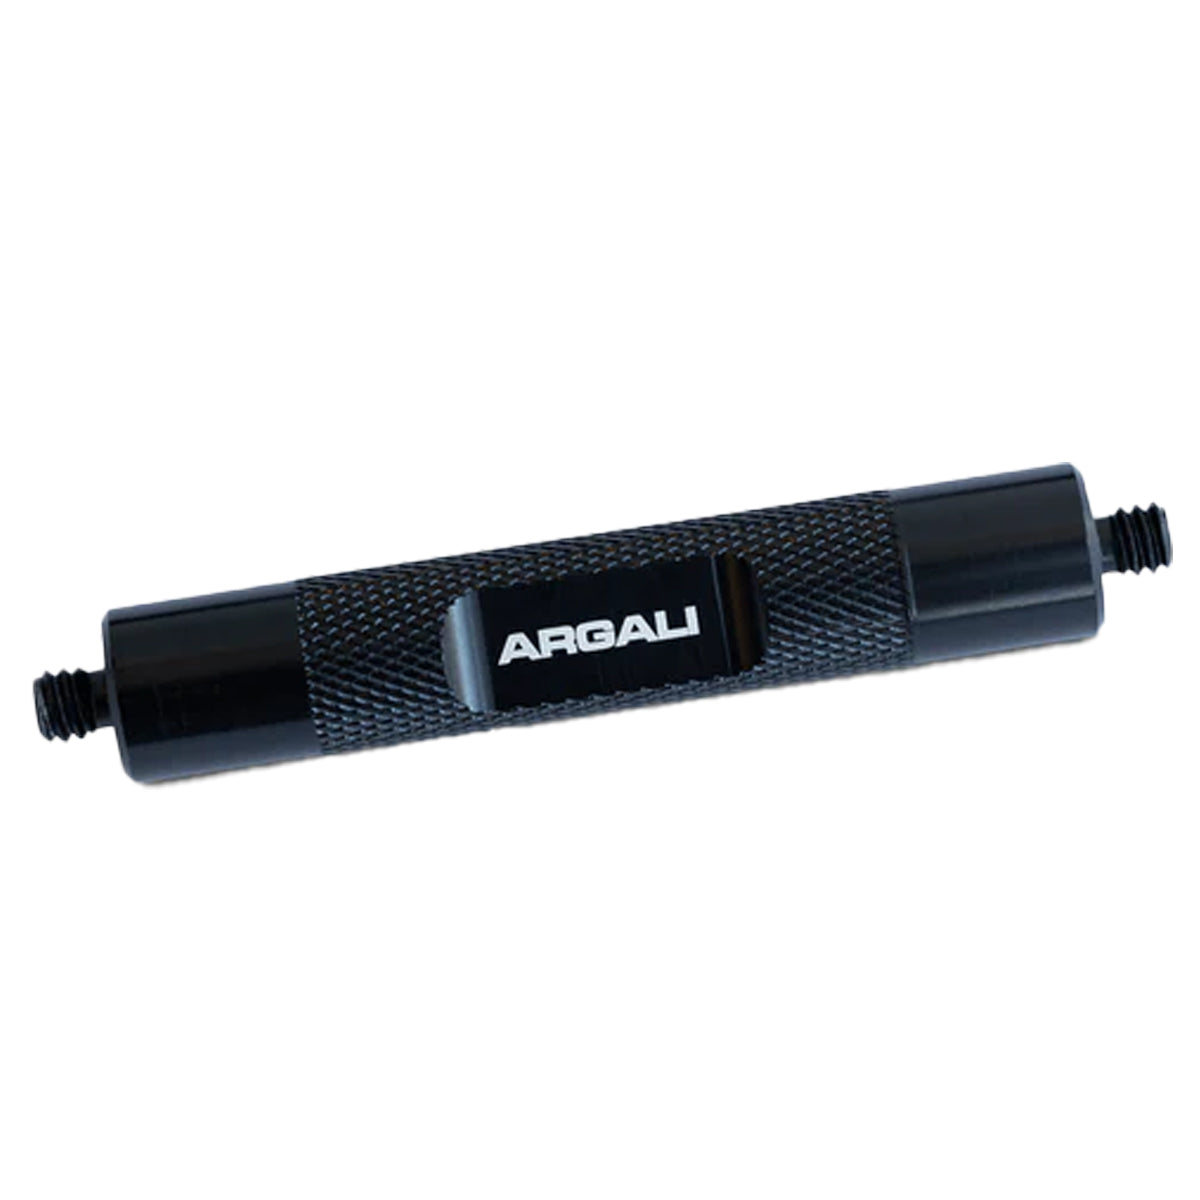 Argali X3 Trekking Pole Adapter in  by GOHUNT | Argali - GOHUNT Shop